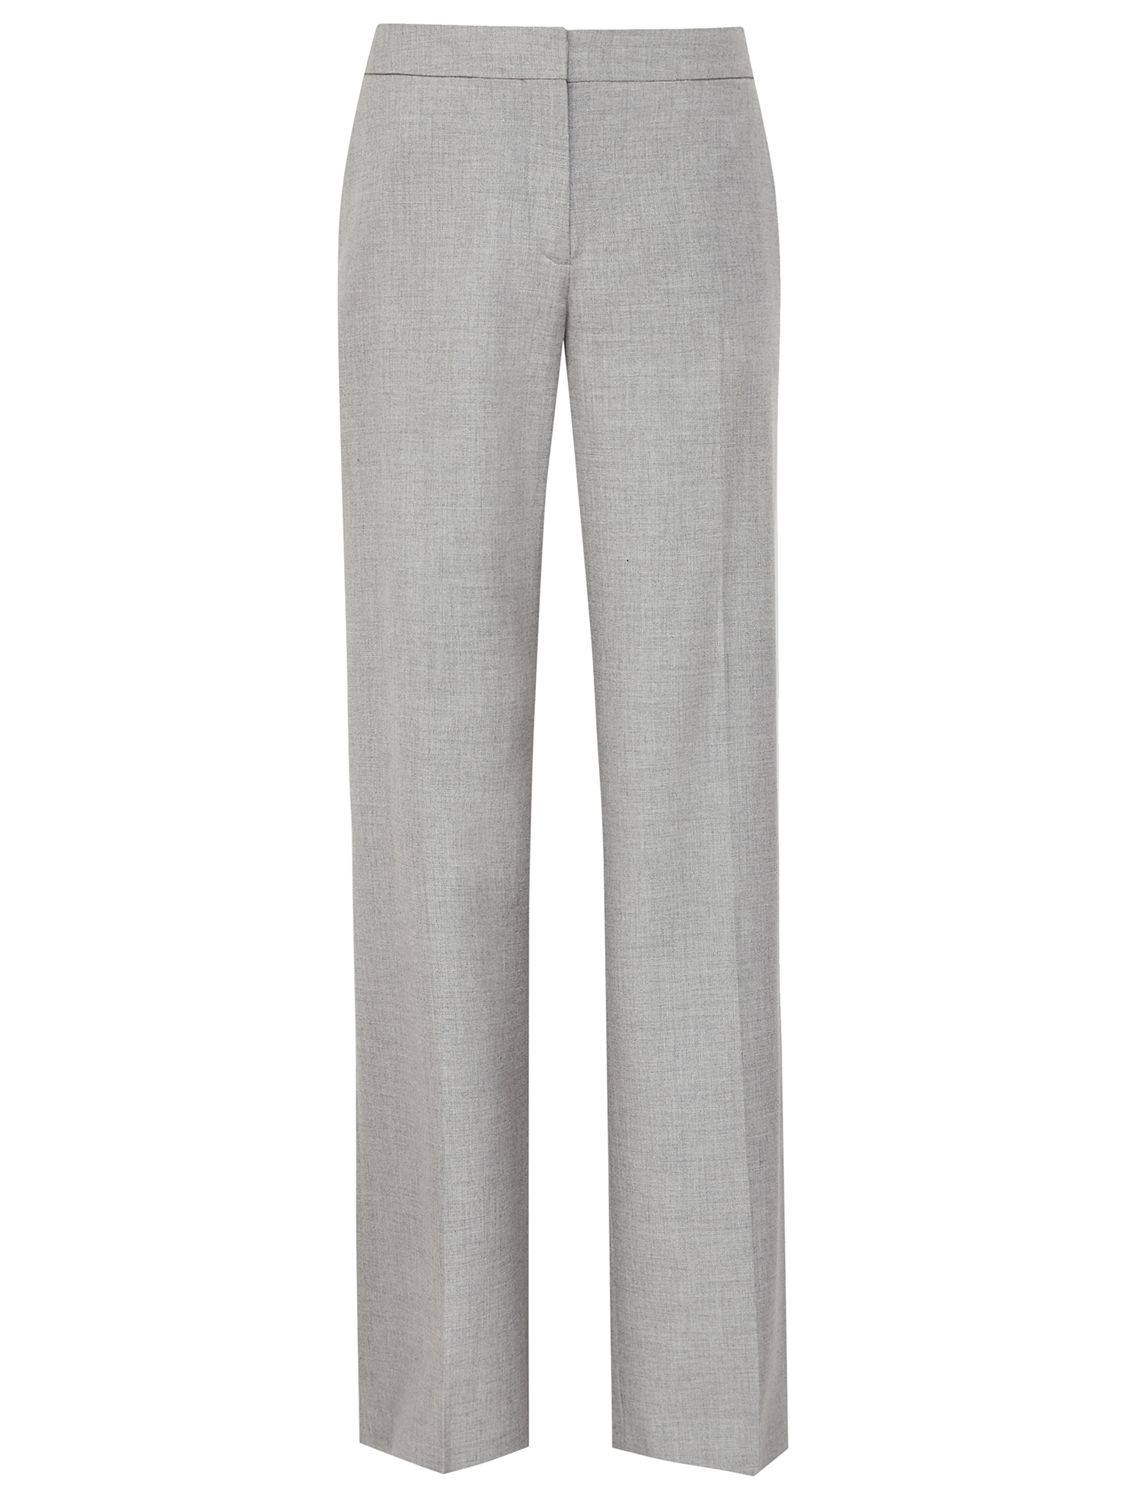 Reiss Estie Tailored Trousers, Grey